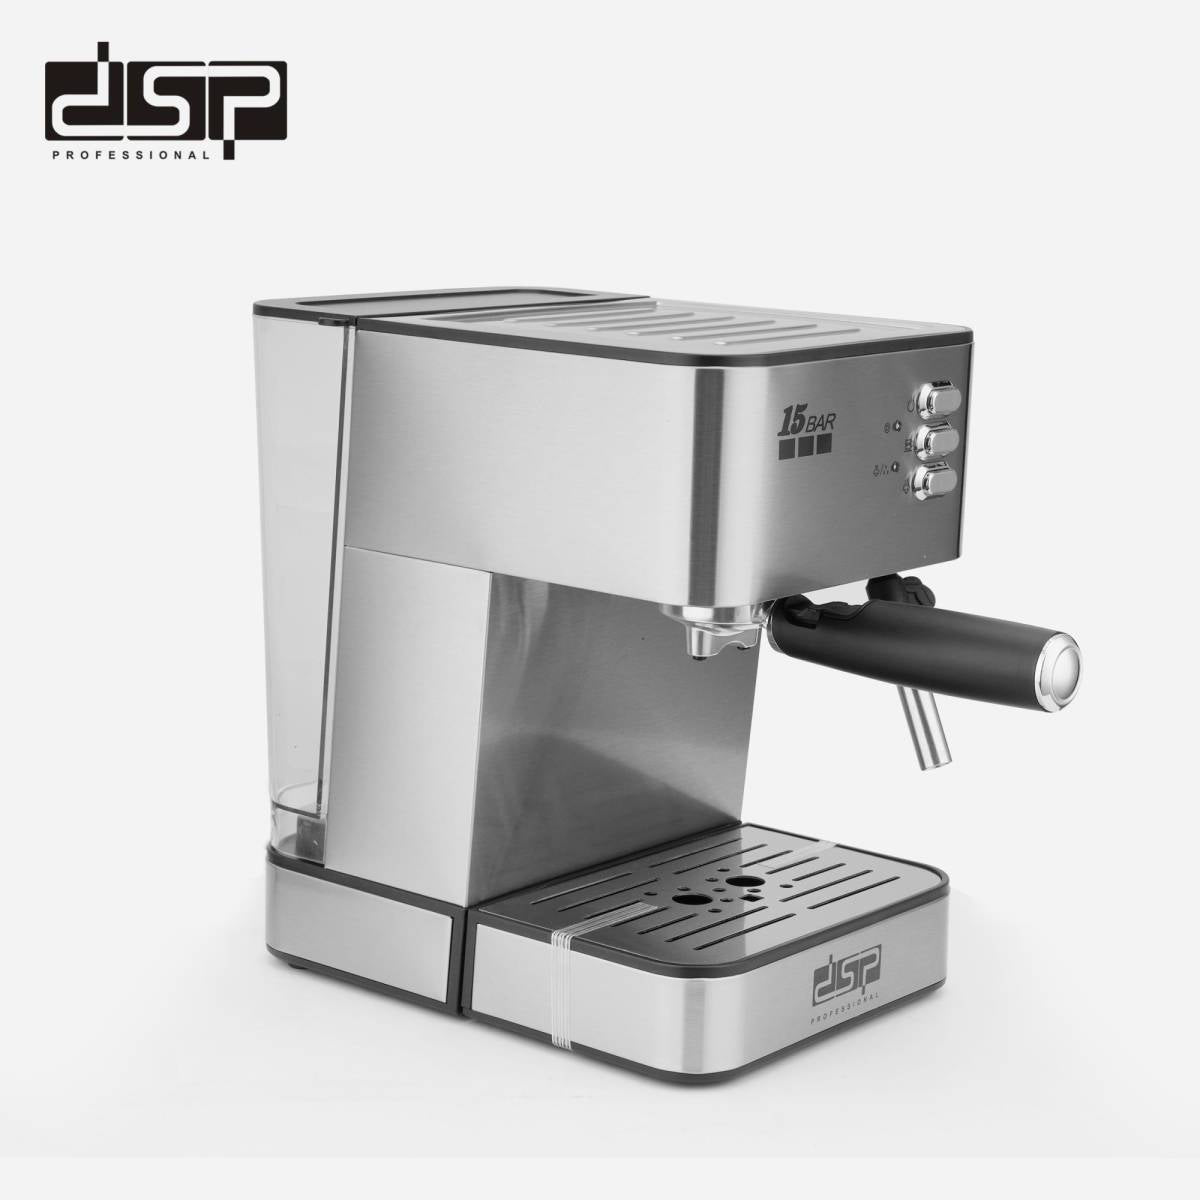 Hot sales DSP Office Italian Semi automatic Steam Bar Milk Foam Machine Integrated Coffee Machine